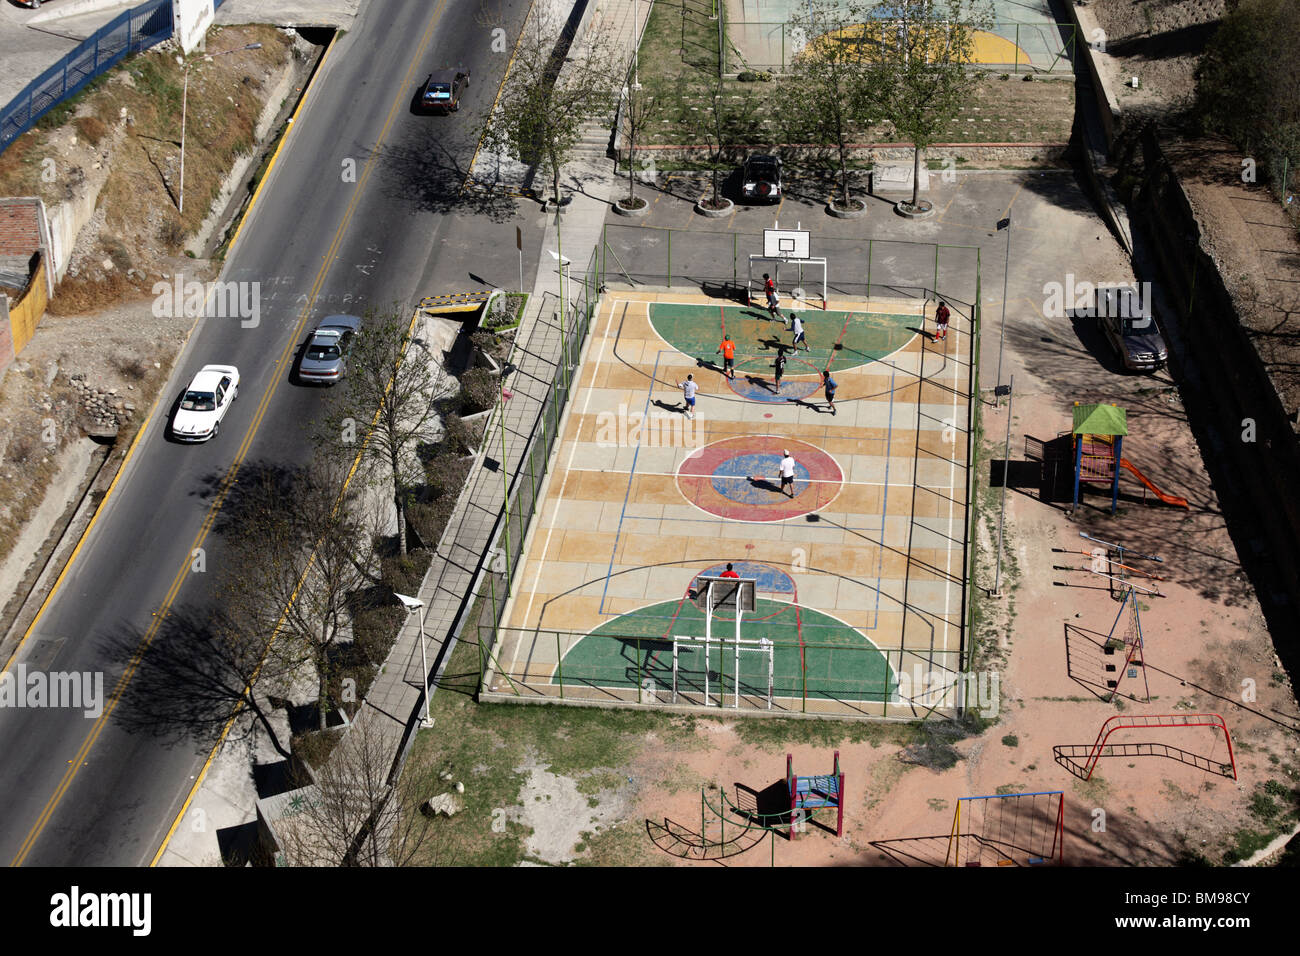 Aerial view of concrete football pitches with basketball courts in the Parque Urbano Central alongside Avenida del Poeta, La Paz, Bolivia. Stock Photo